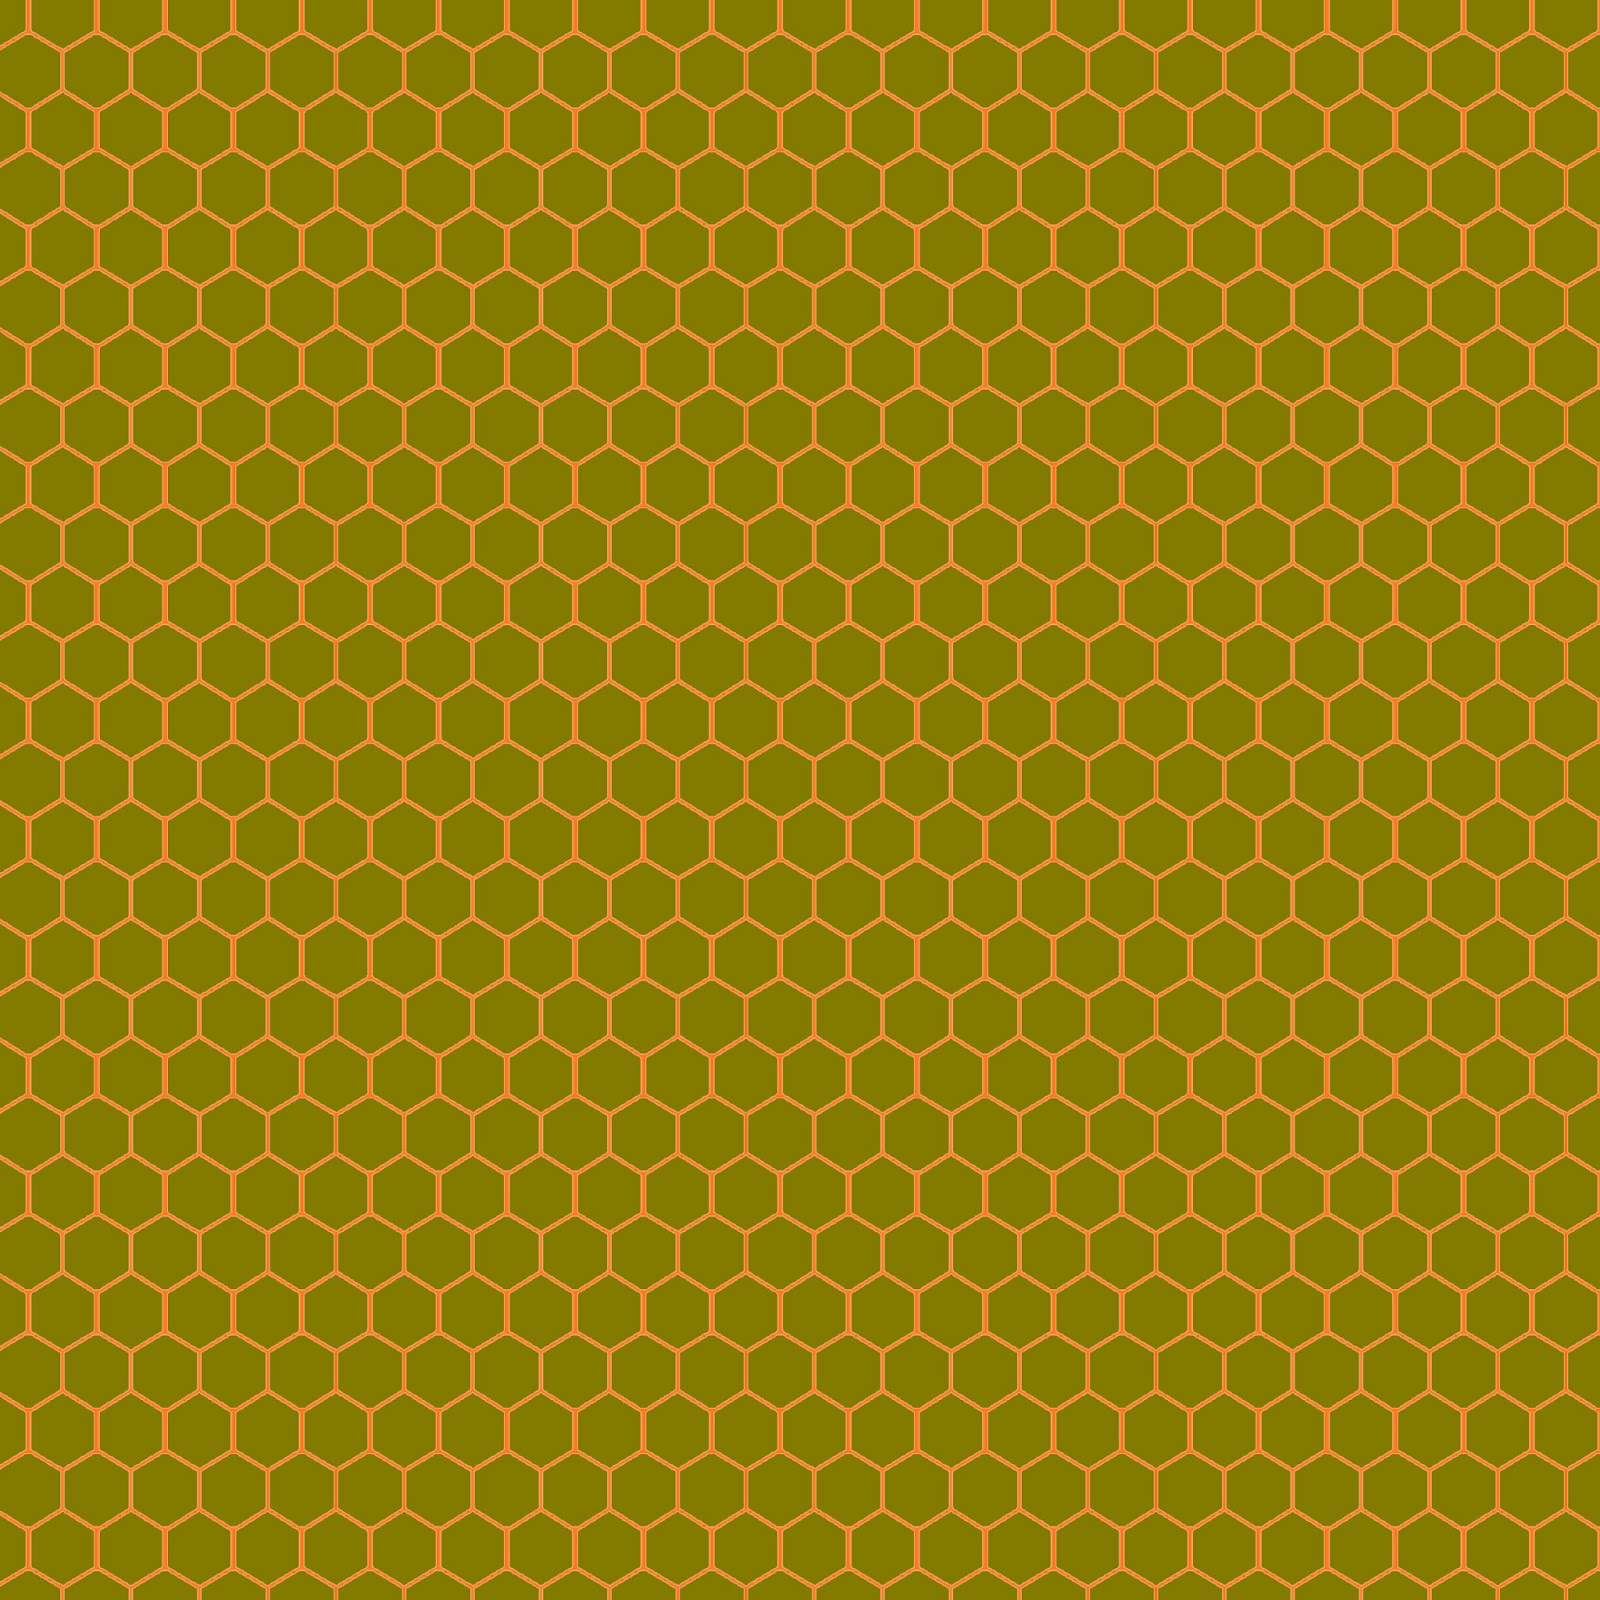 Simple Hexagon Honeycomb Image Design